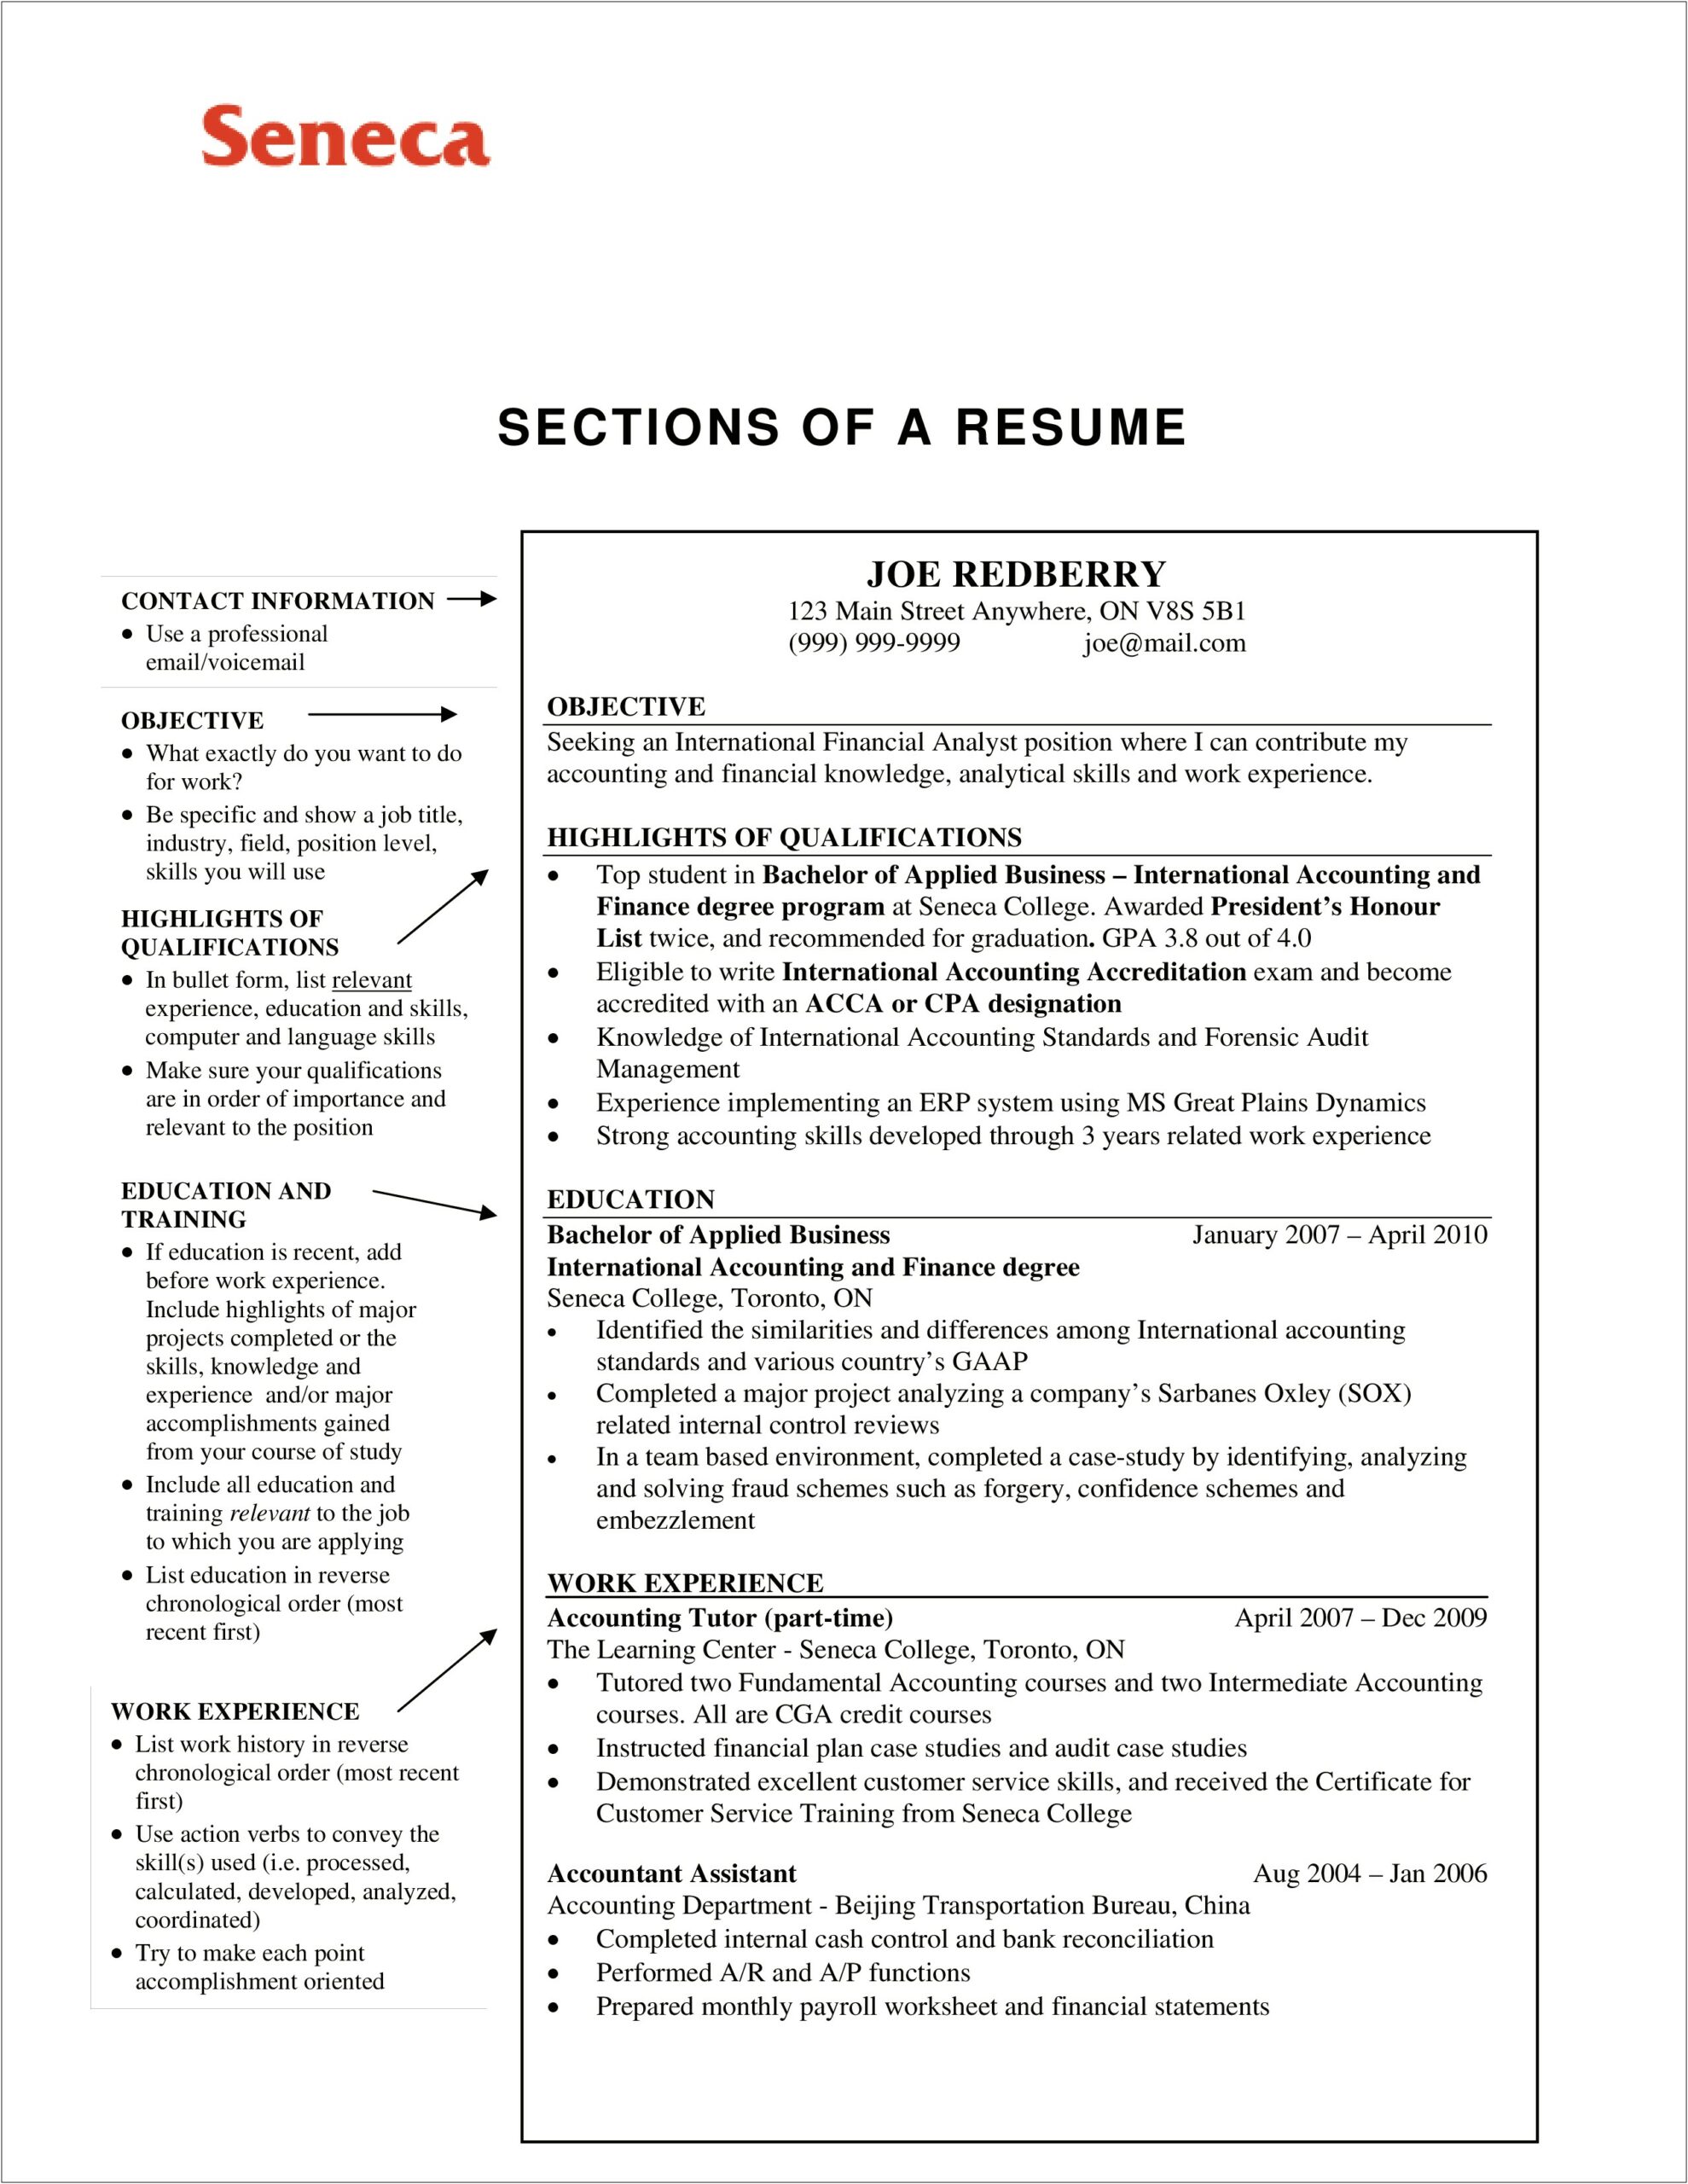 Resume Work Experience Reverse Chronological Order